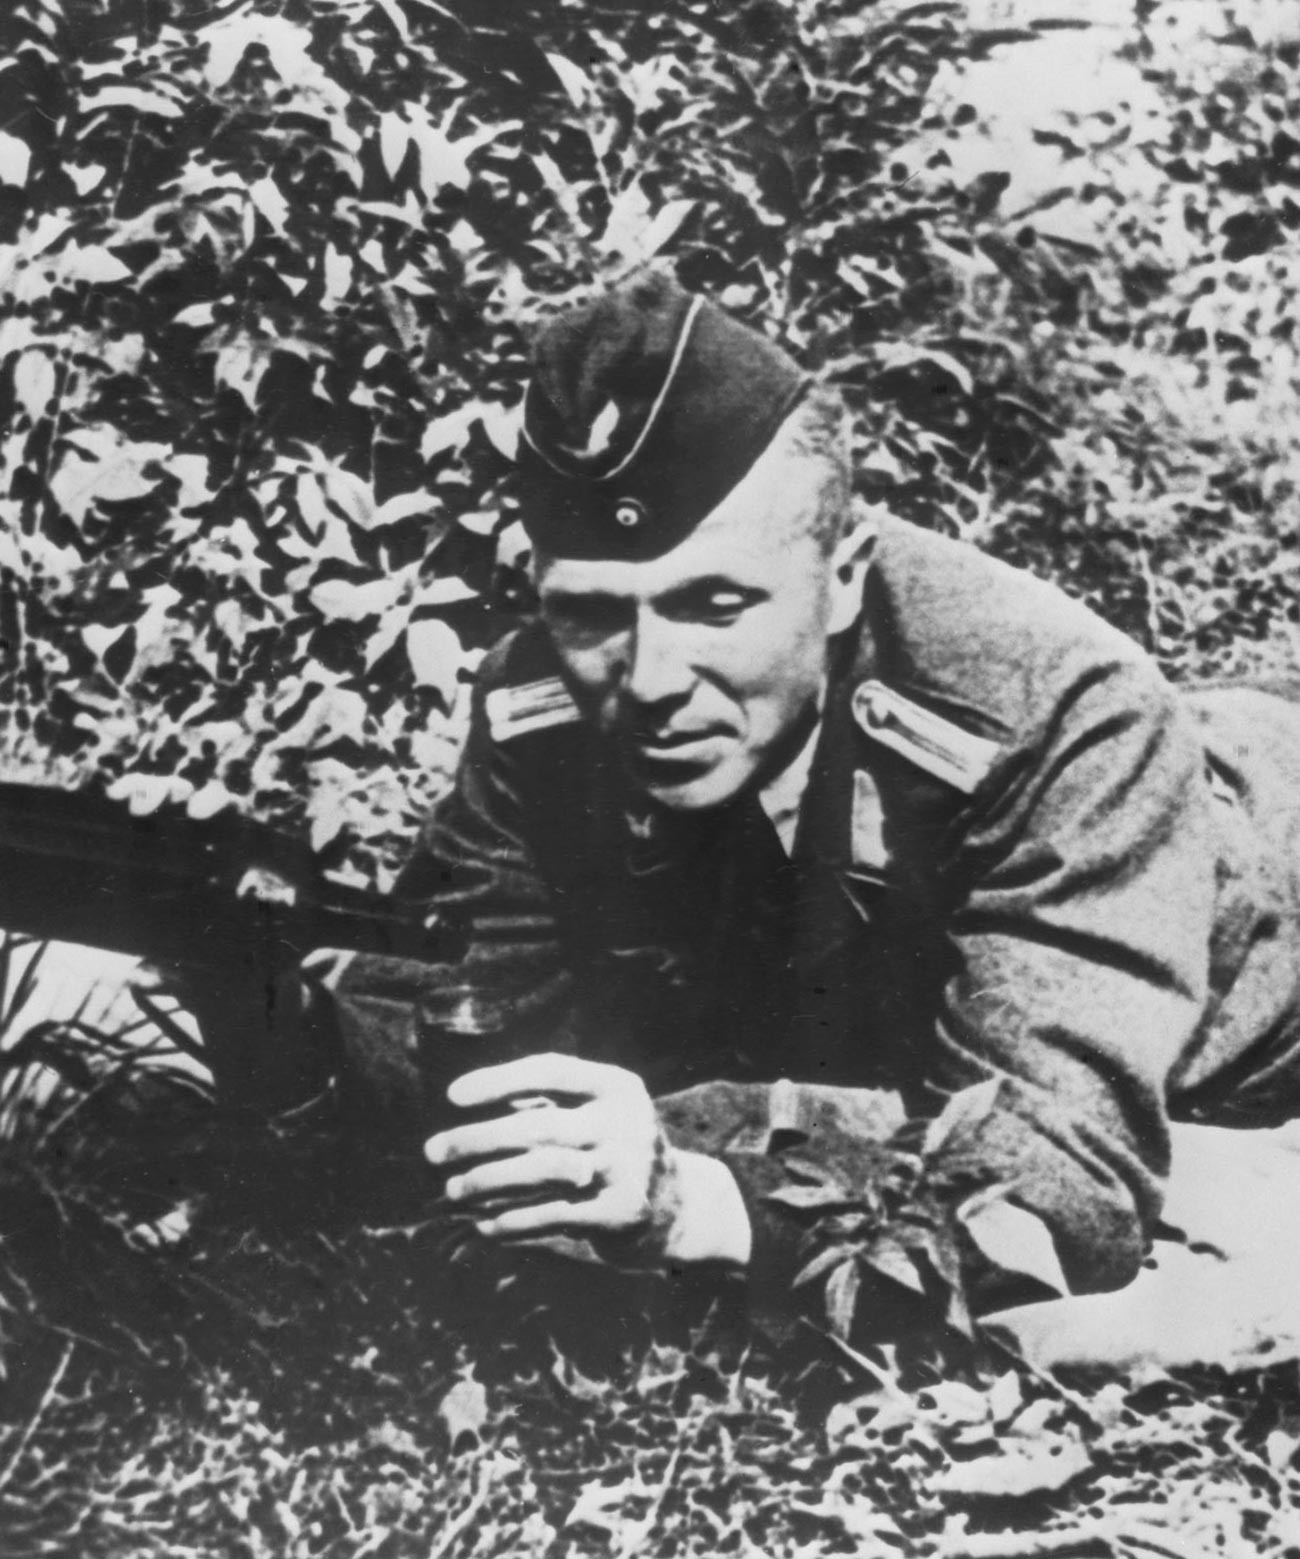 Soviet scout Nikolai Kuznetsov in the uniform of a German officer.